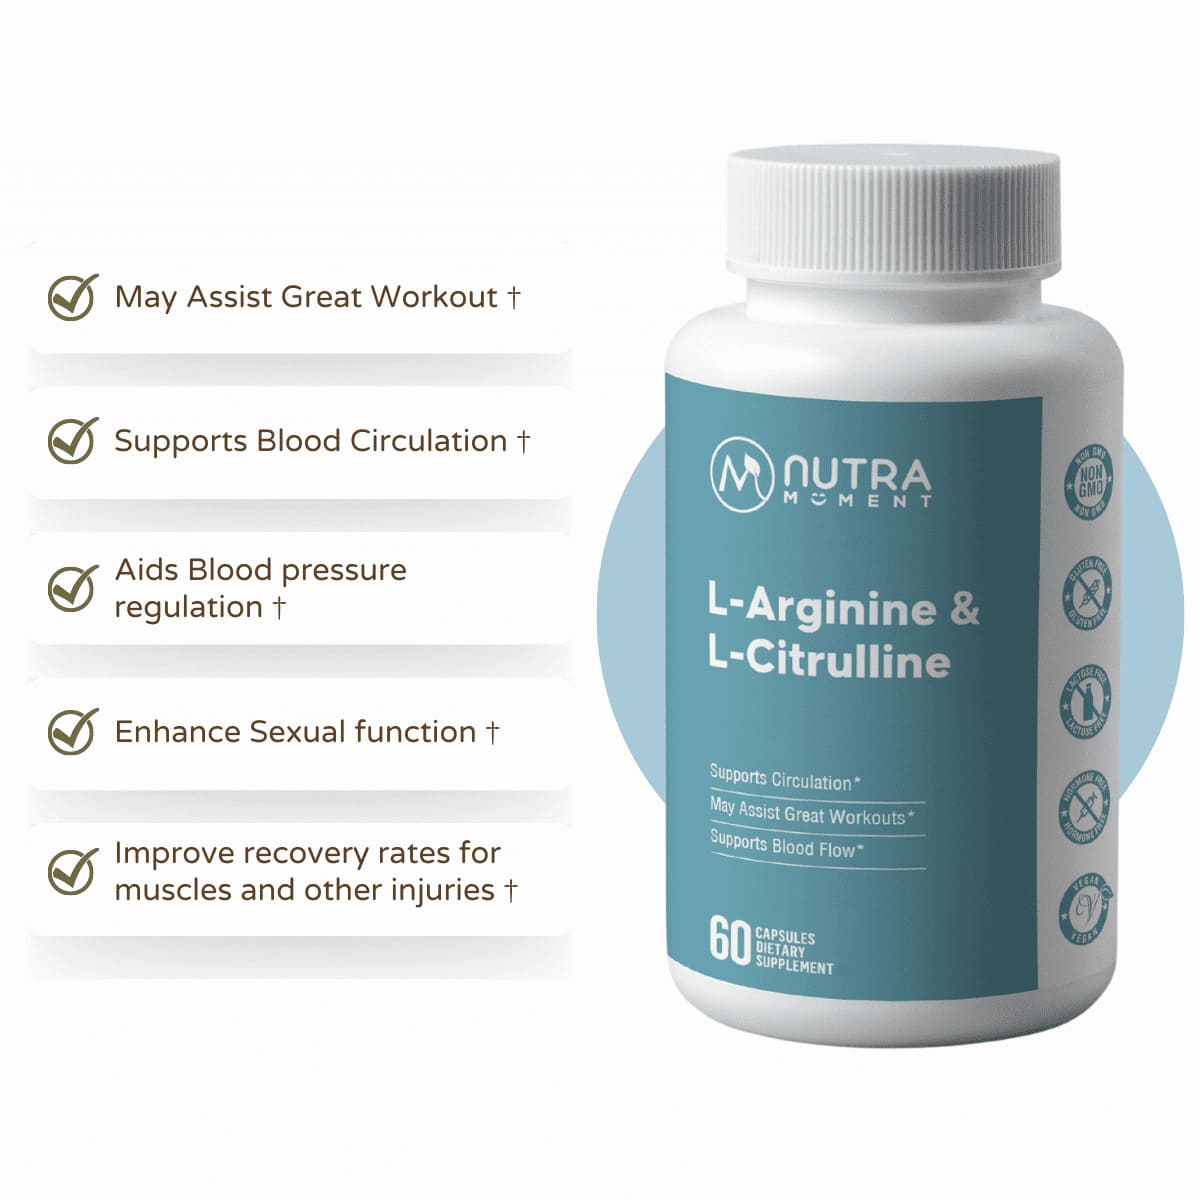 Nutra Moment | L-Arginine & L-Citrulline | Product Highlights & Benefits